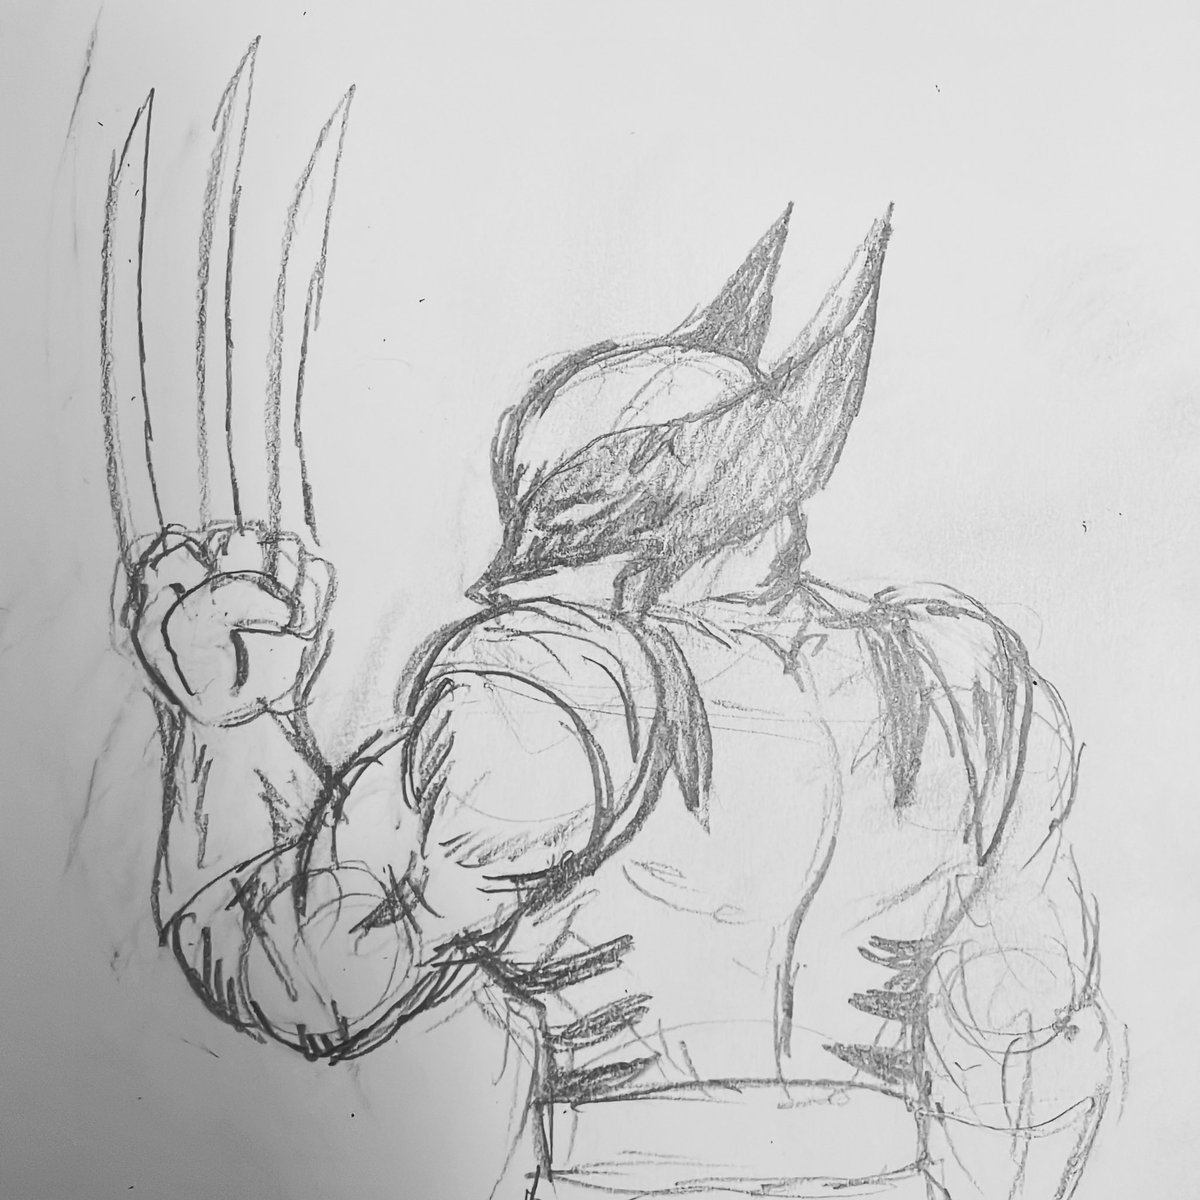 Real fast pencil sketch of Wolverine.
#drawingartwork #illustration #sketchbookart #wolverinefanart #xmenfanart #comics #comicart #comicbookart #makingarteveryday #draweveryday #lovewhatyoudo